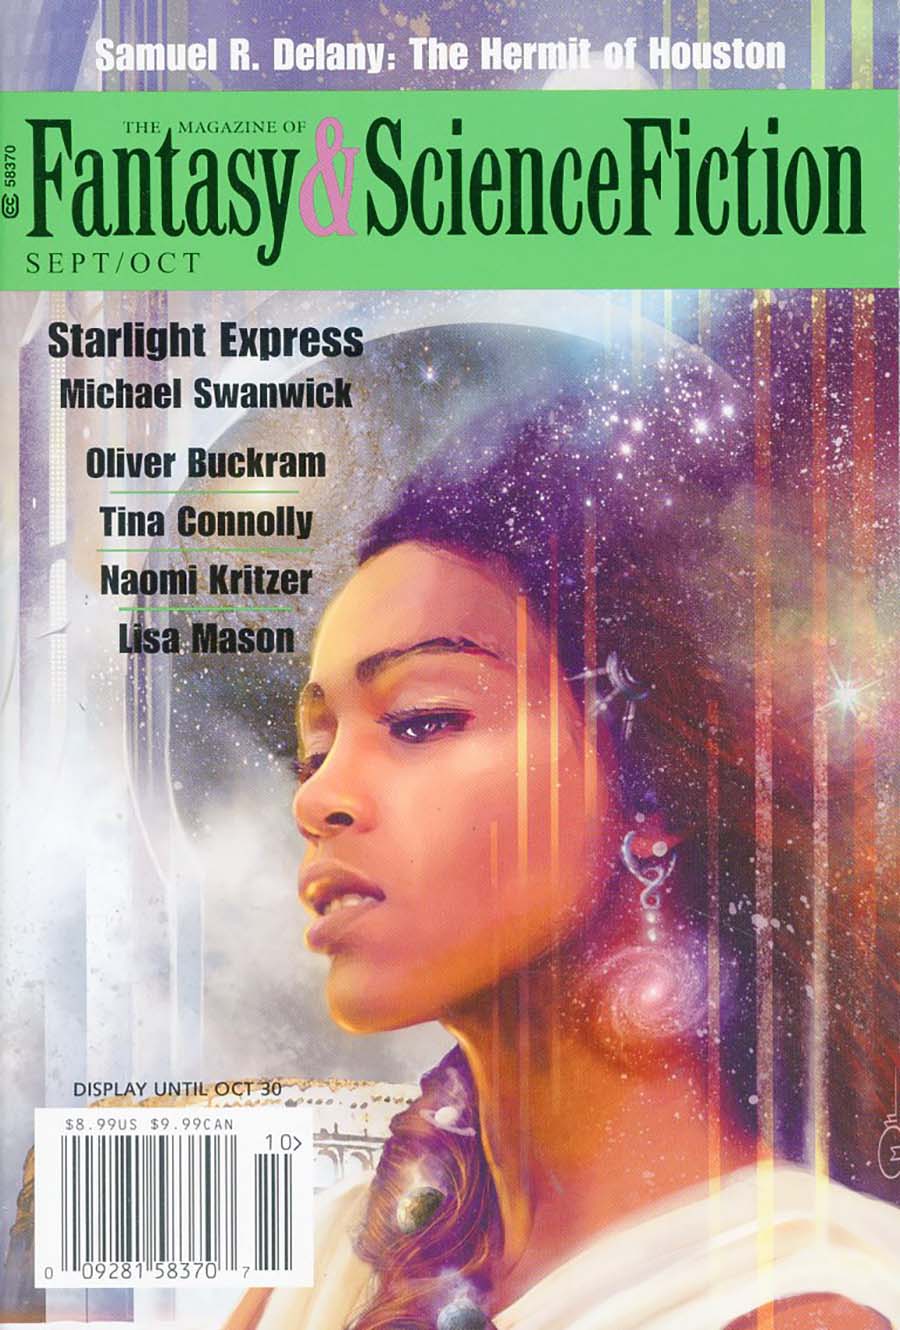 Fantasy & Science Fiction Digest Vol 133 #3 & #4 September / October 2017